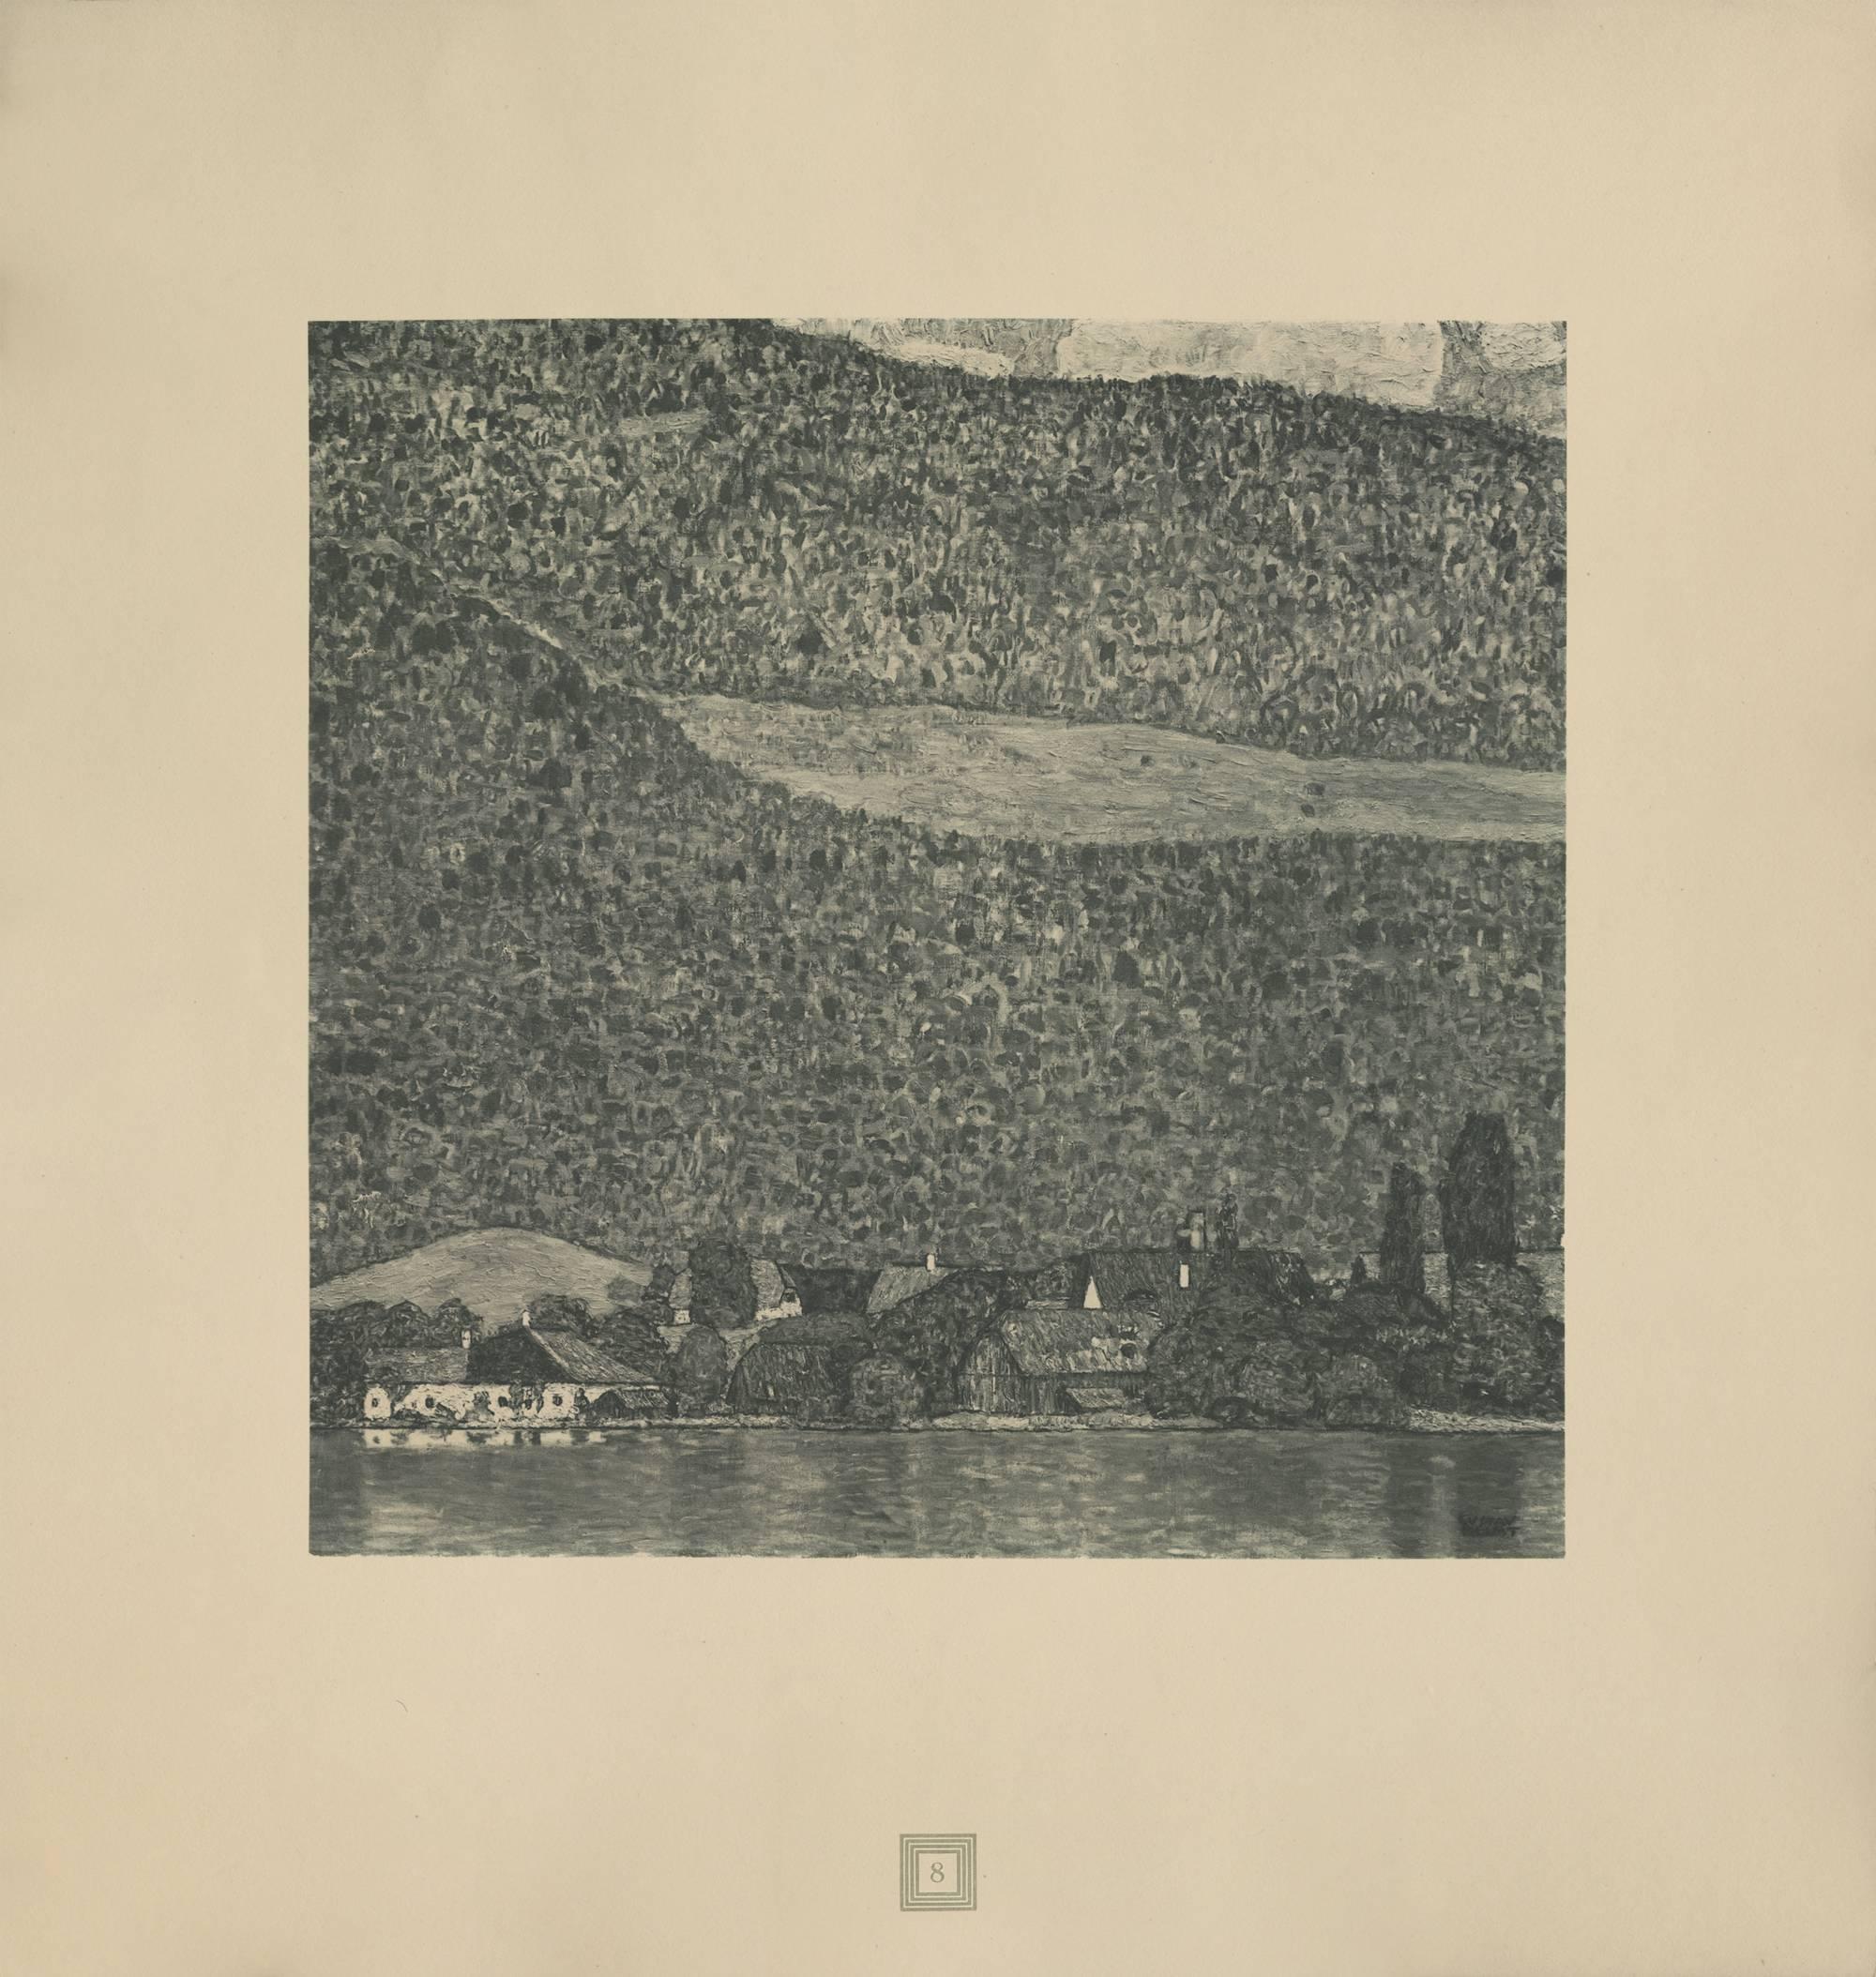 Max Eisler Eine Nachlese folio "Litzlberg on Lake Attersee" collotype